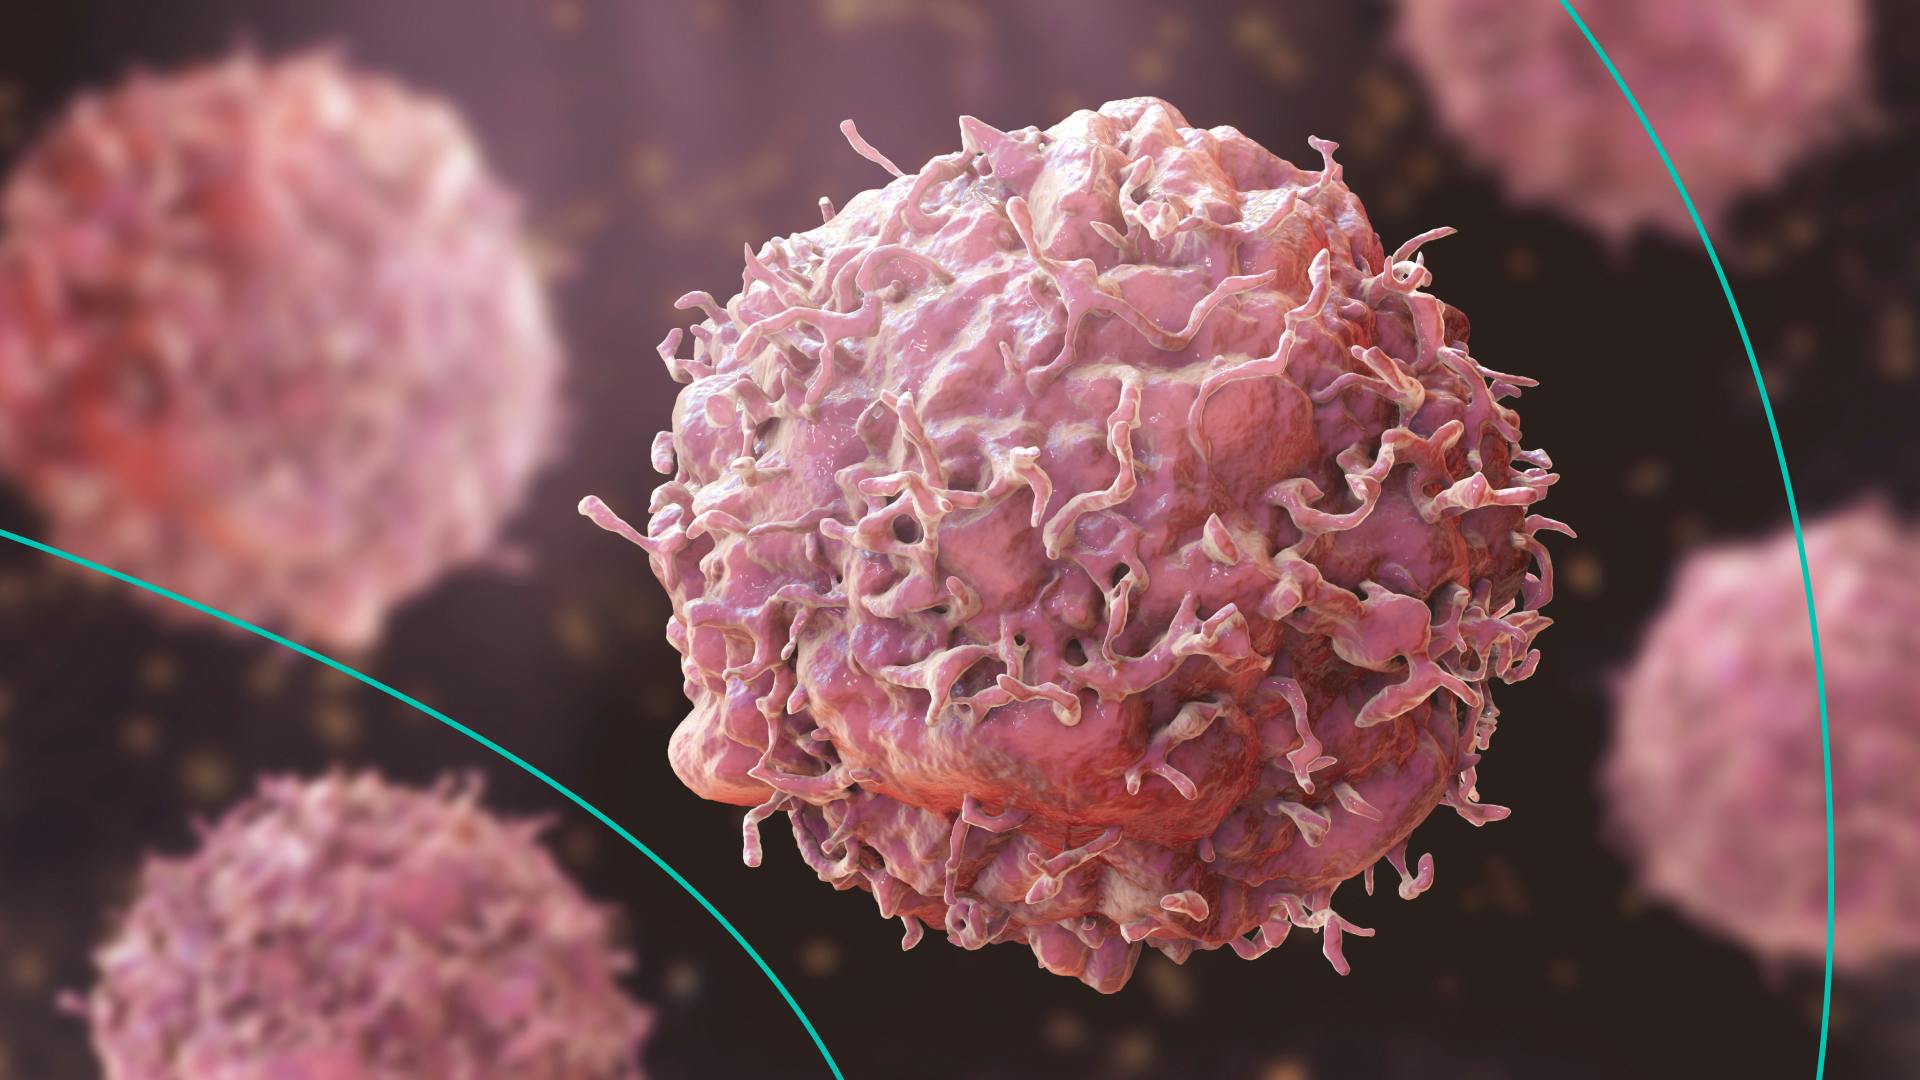 Cancer cells at a molecular level